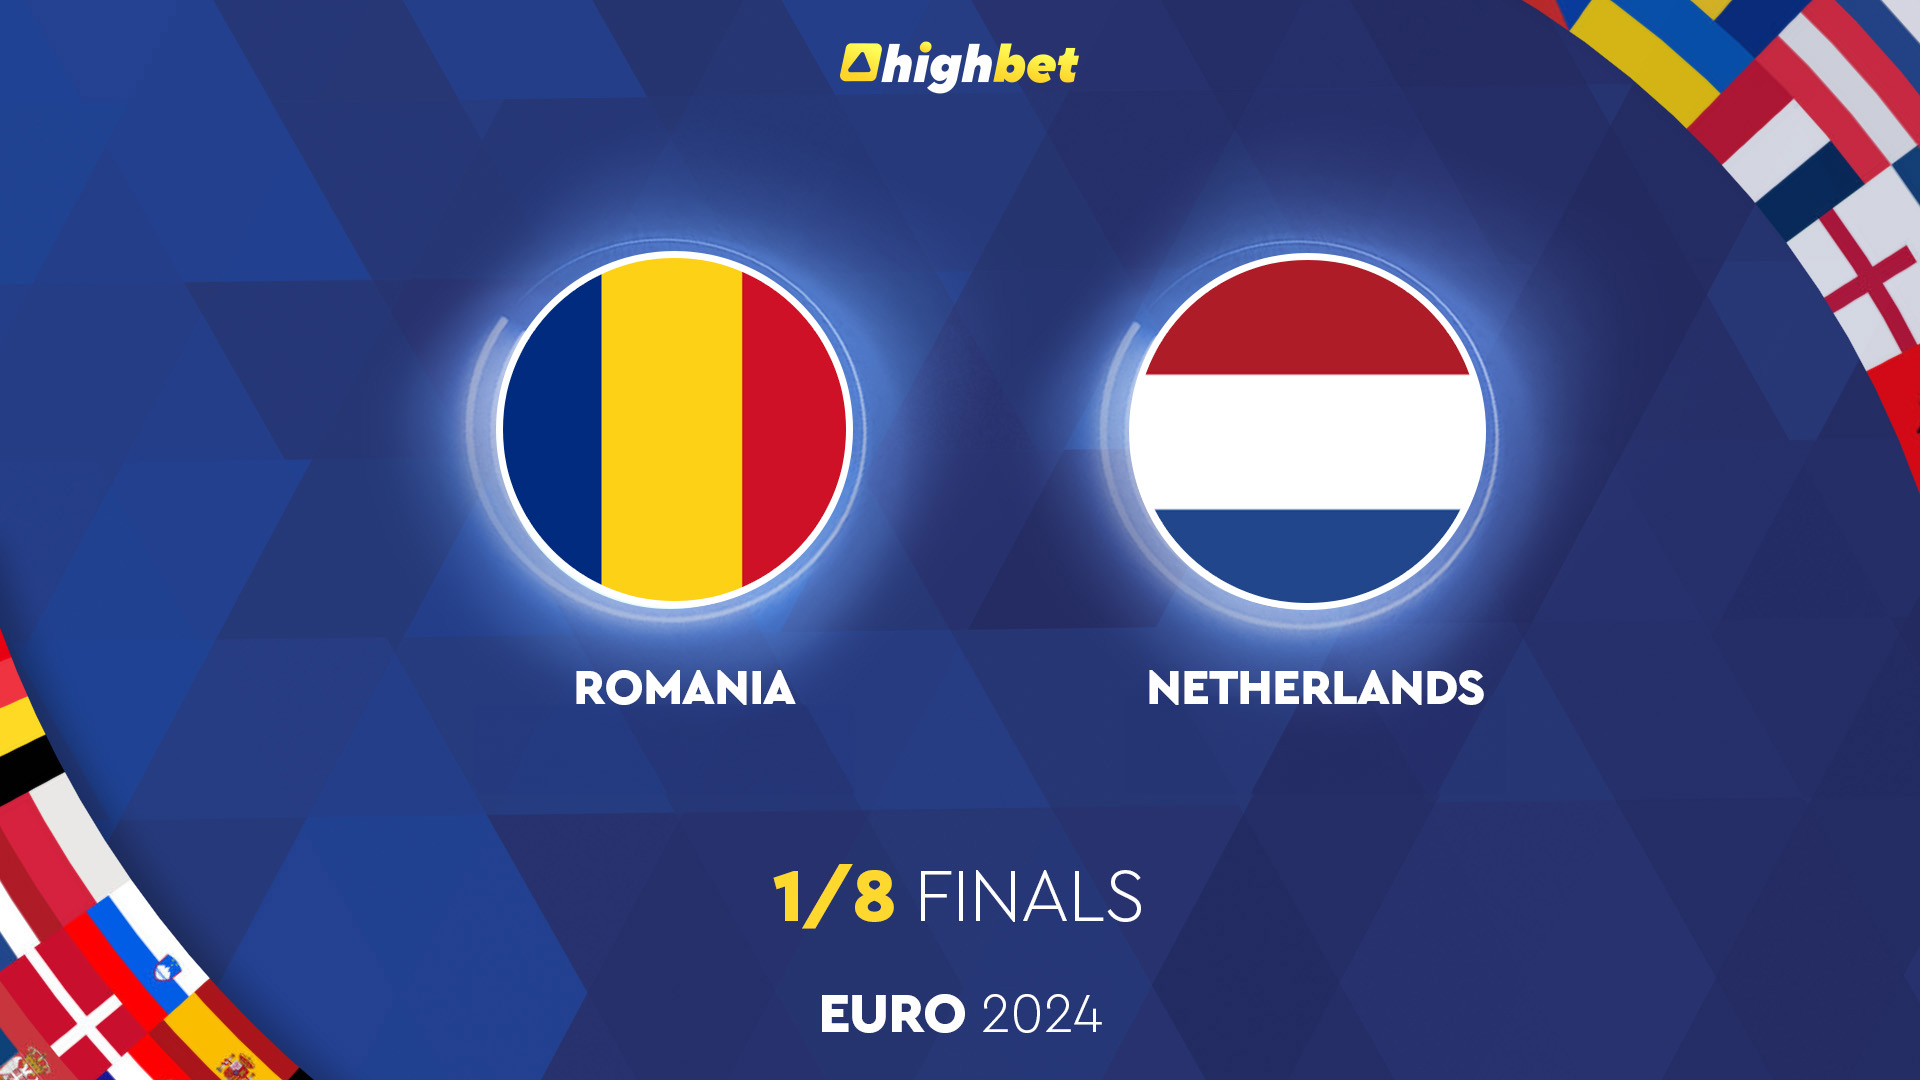 Romania vs Netherlands - Euro 2024 - HighBet Blog